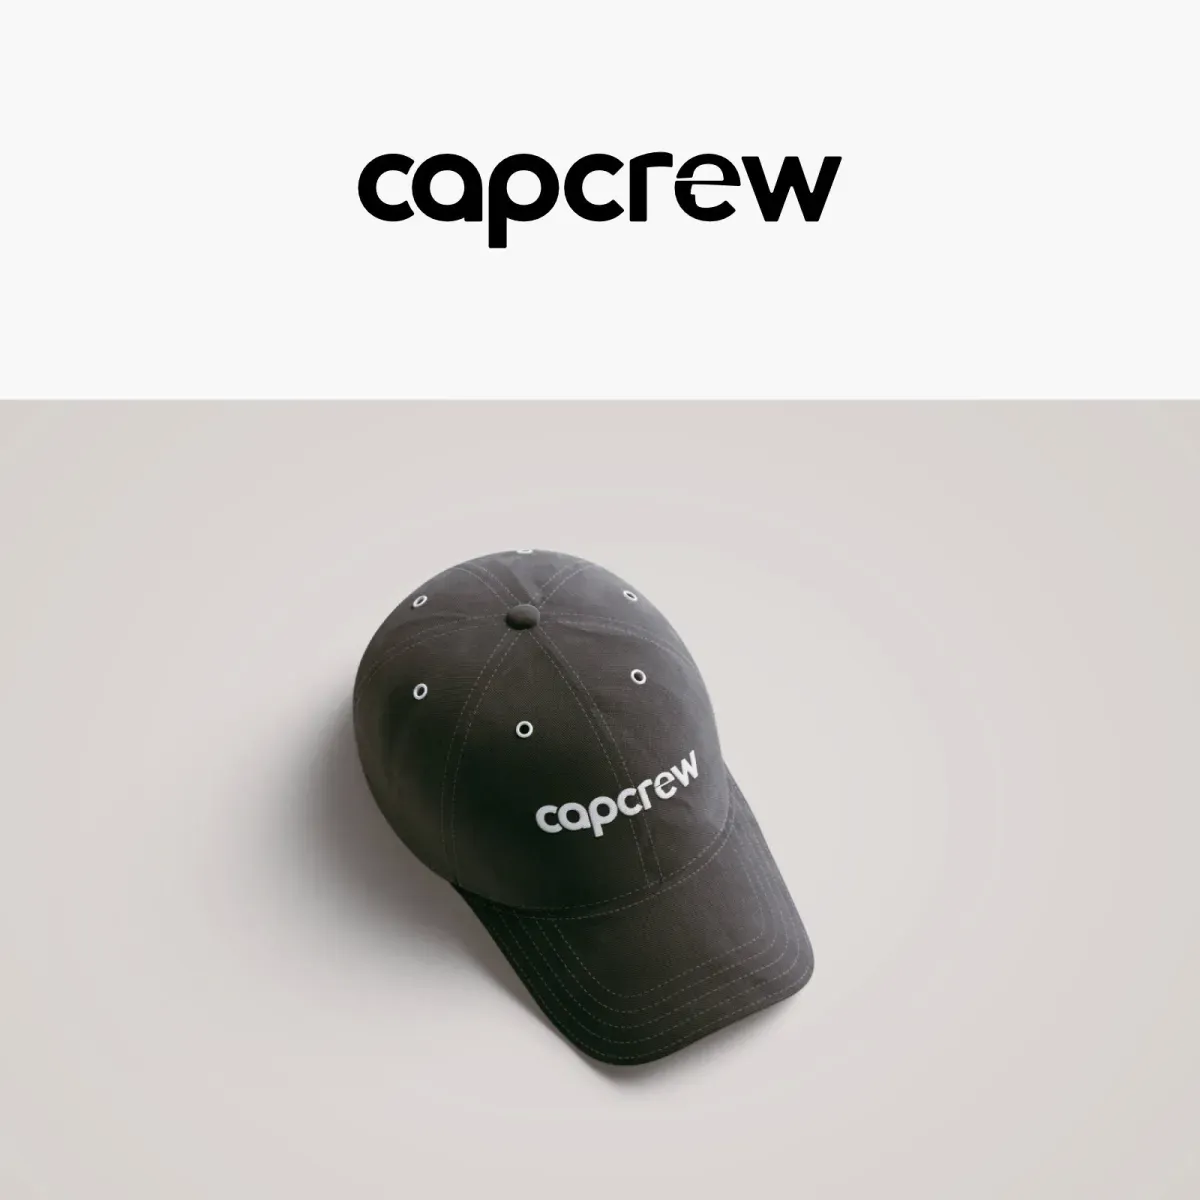 Capcrew logo alternative propositions1